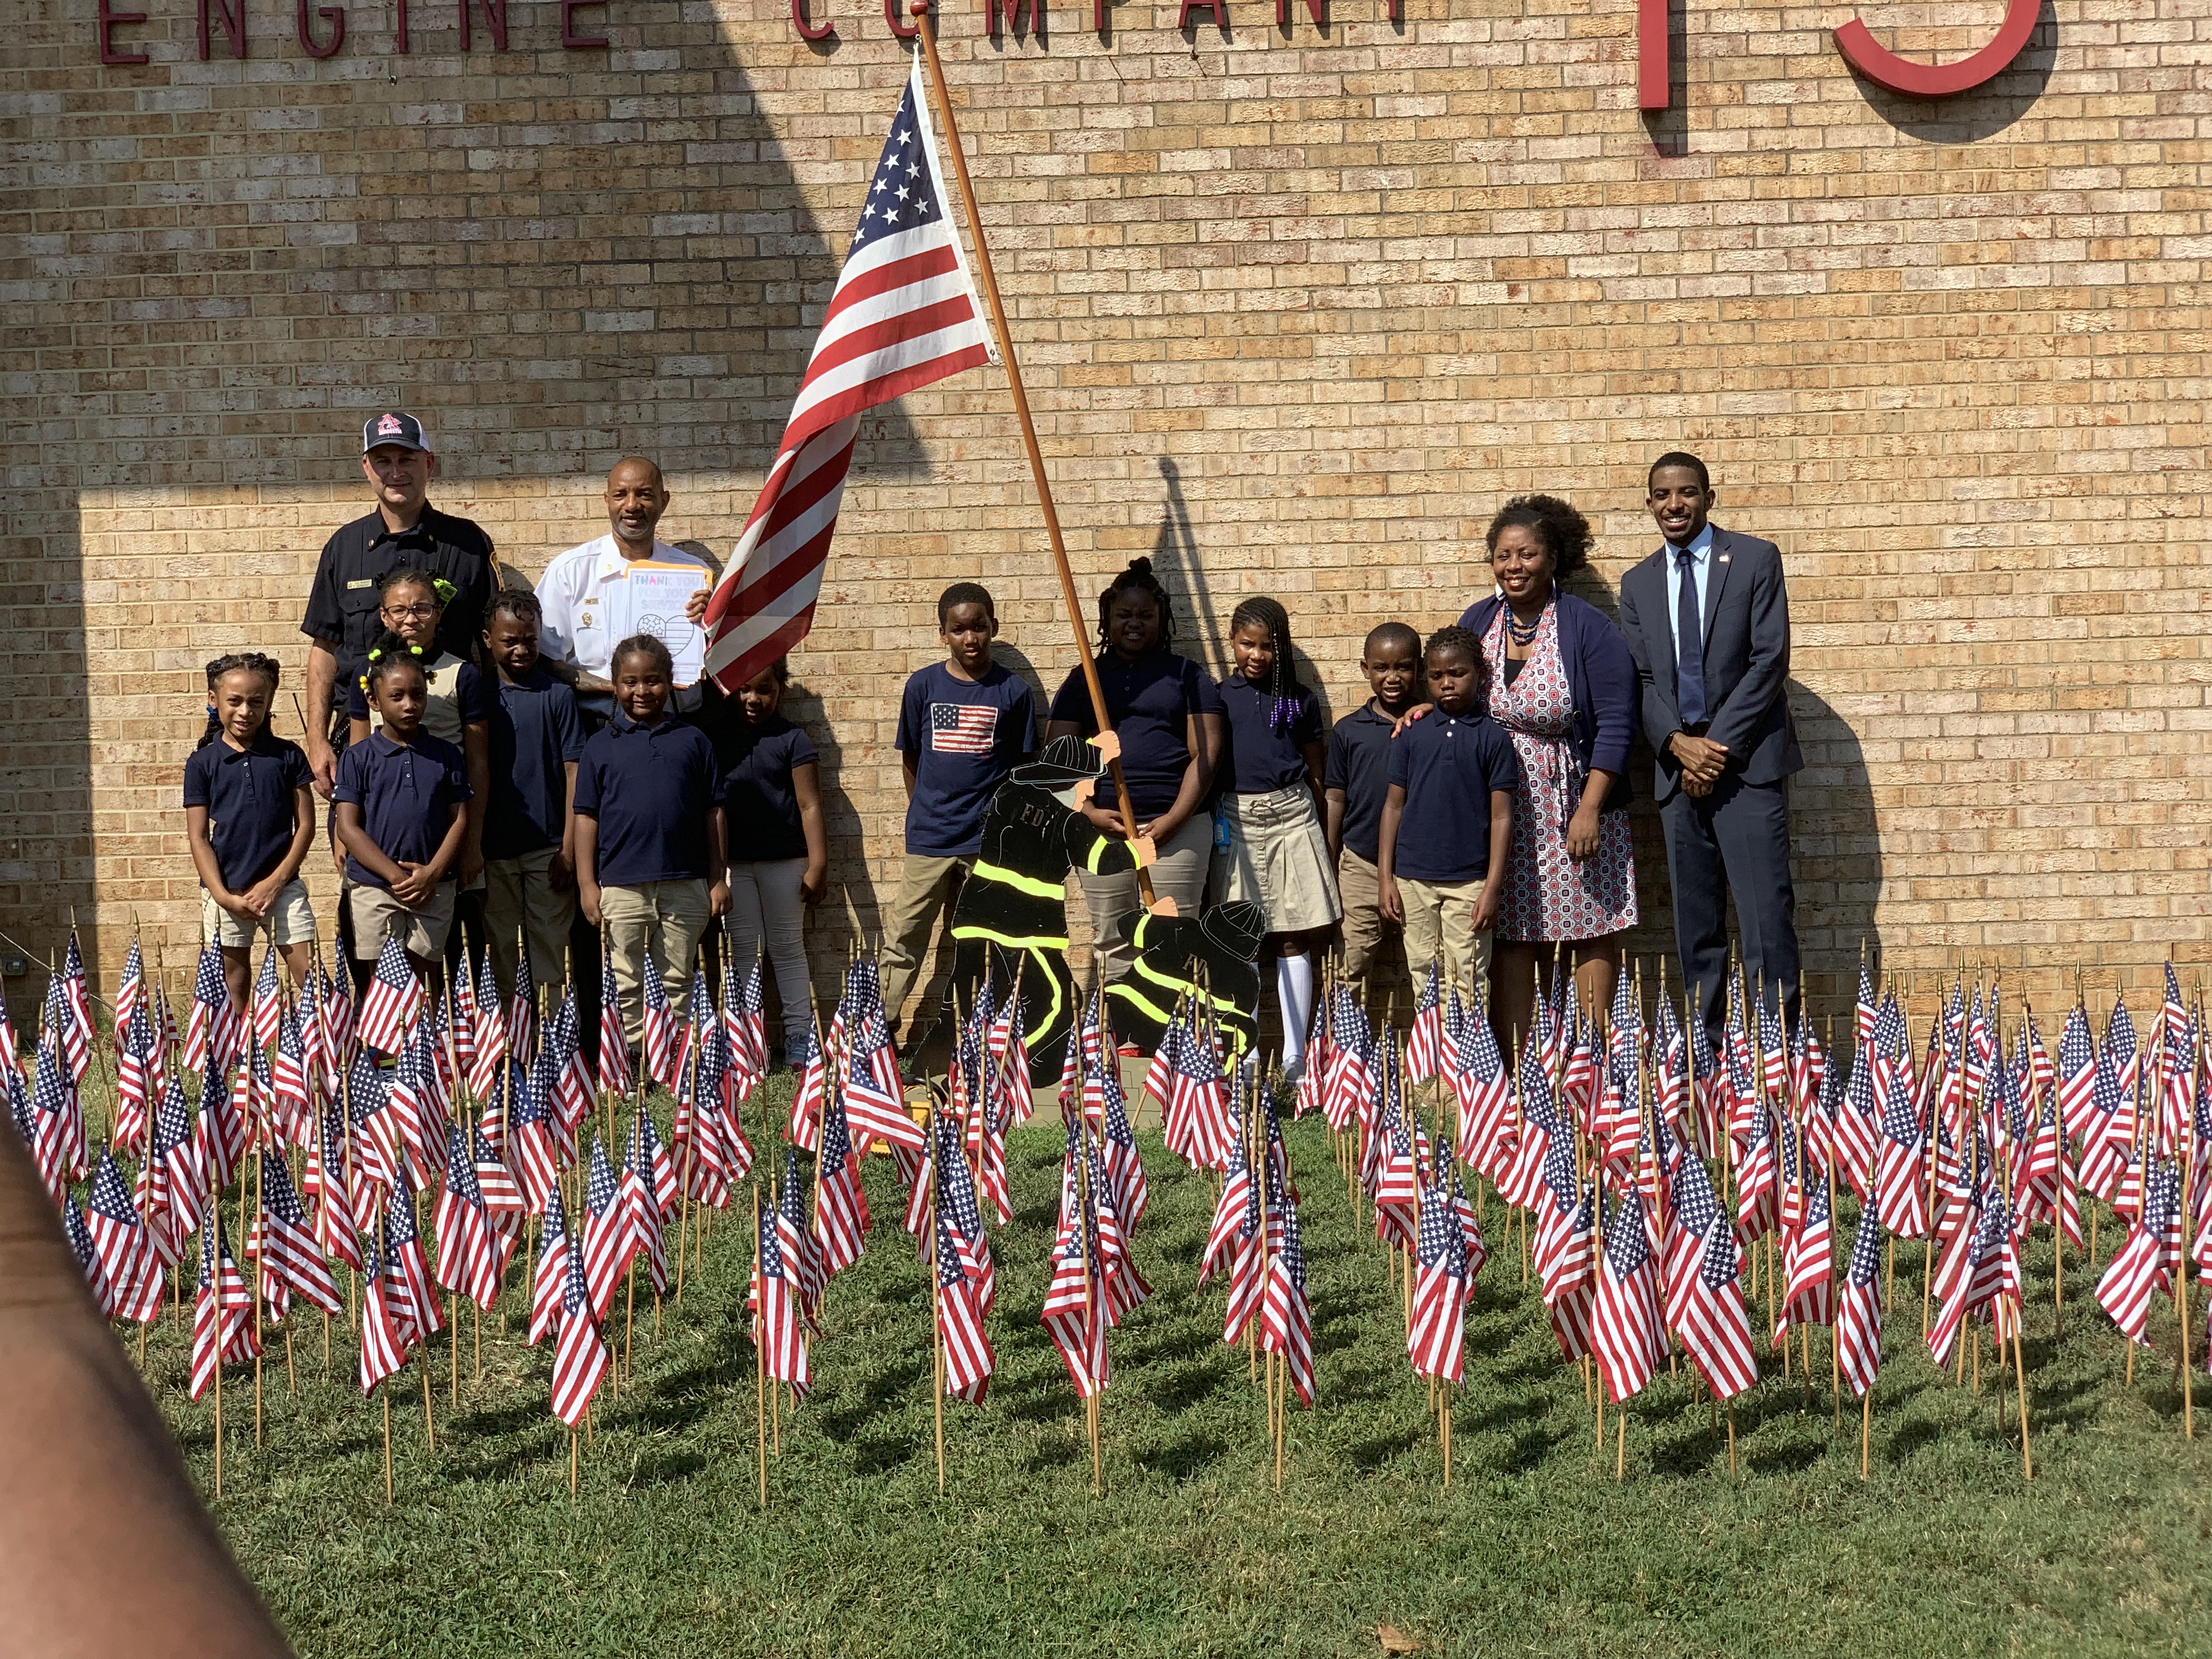 Ketcham Elementary Honors Teacher, Student Killed on 9/11